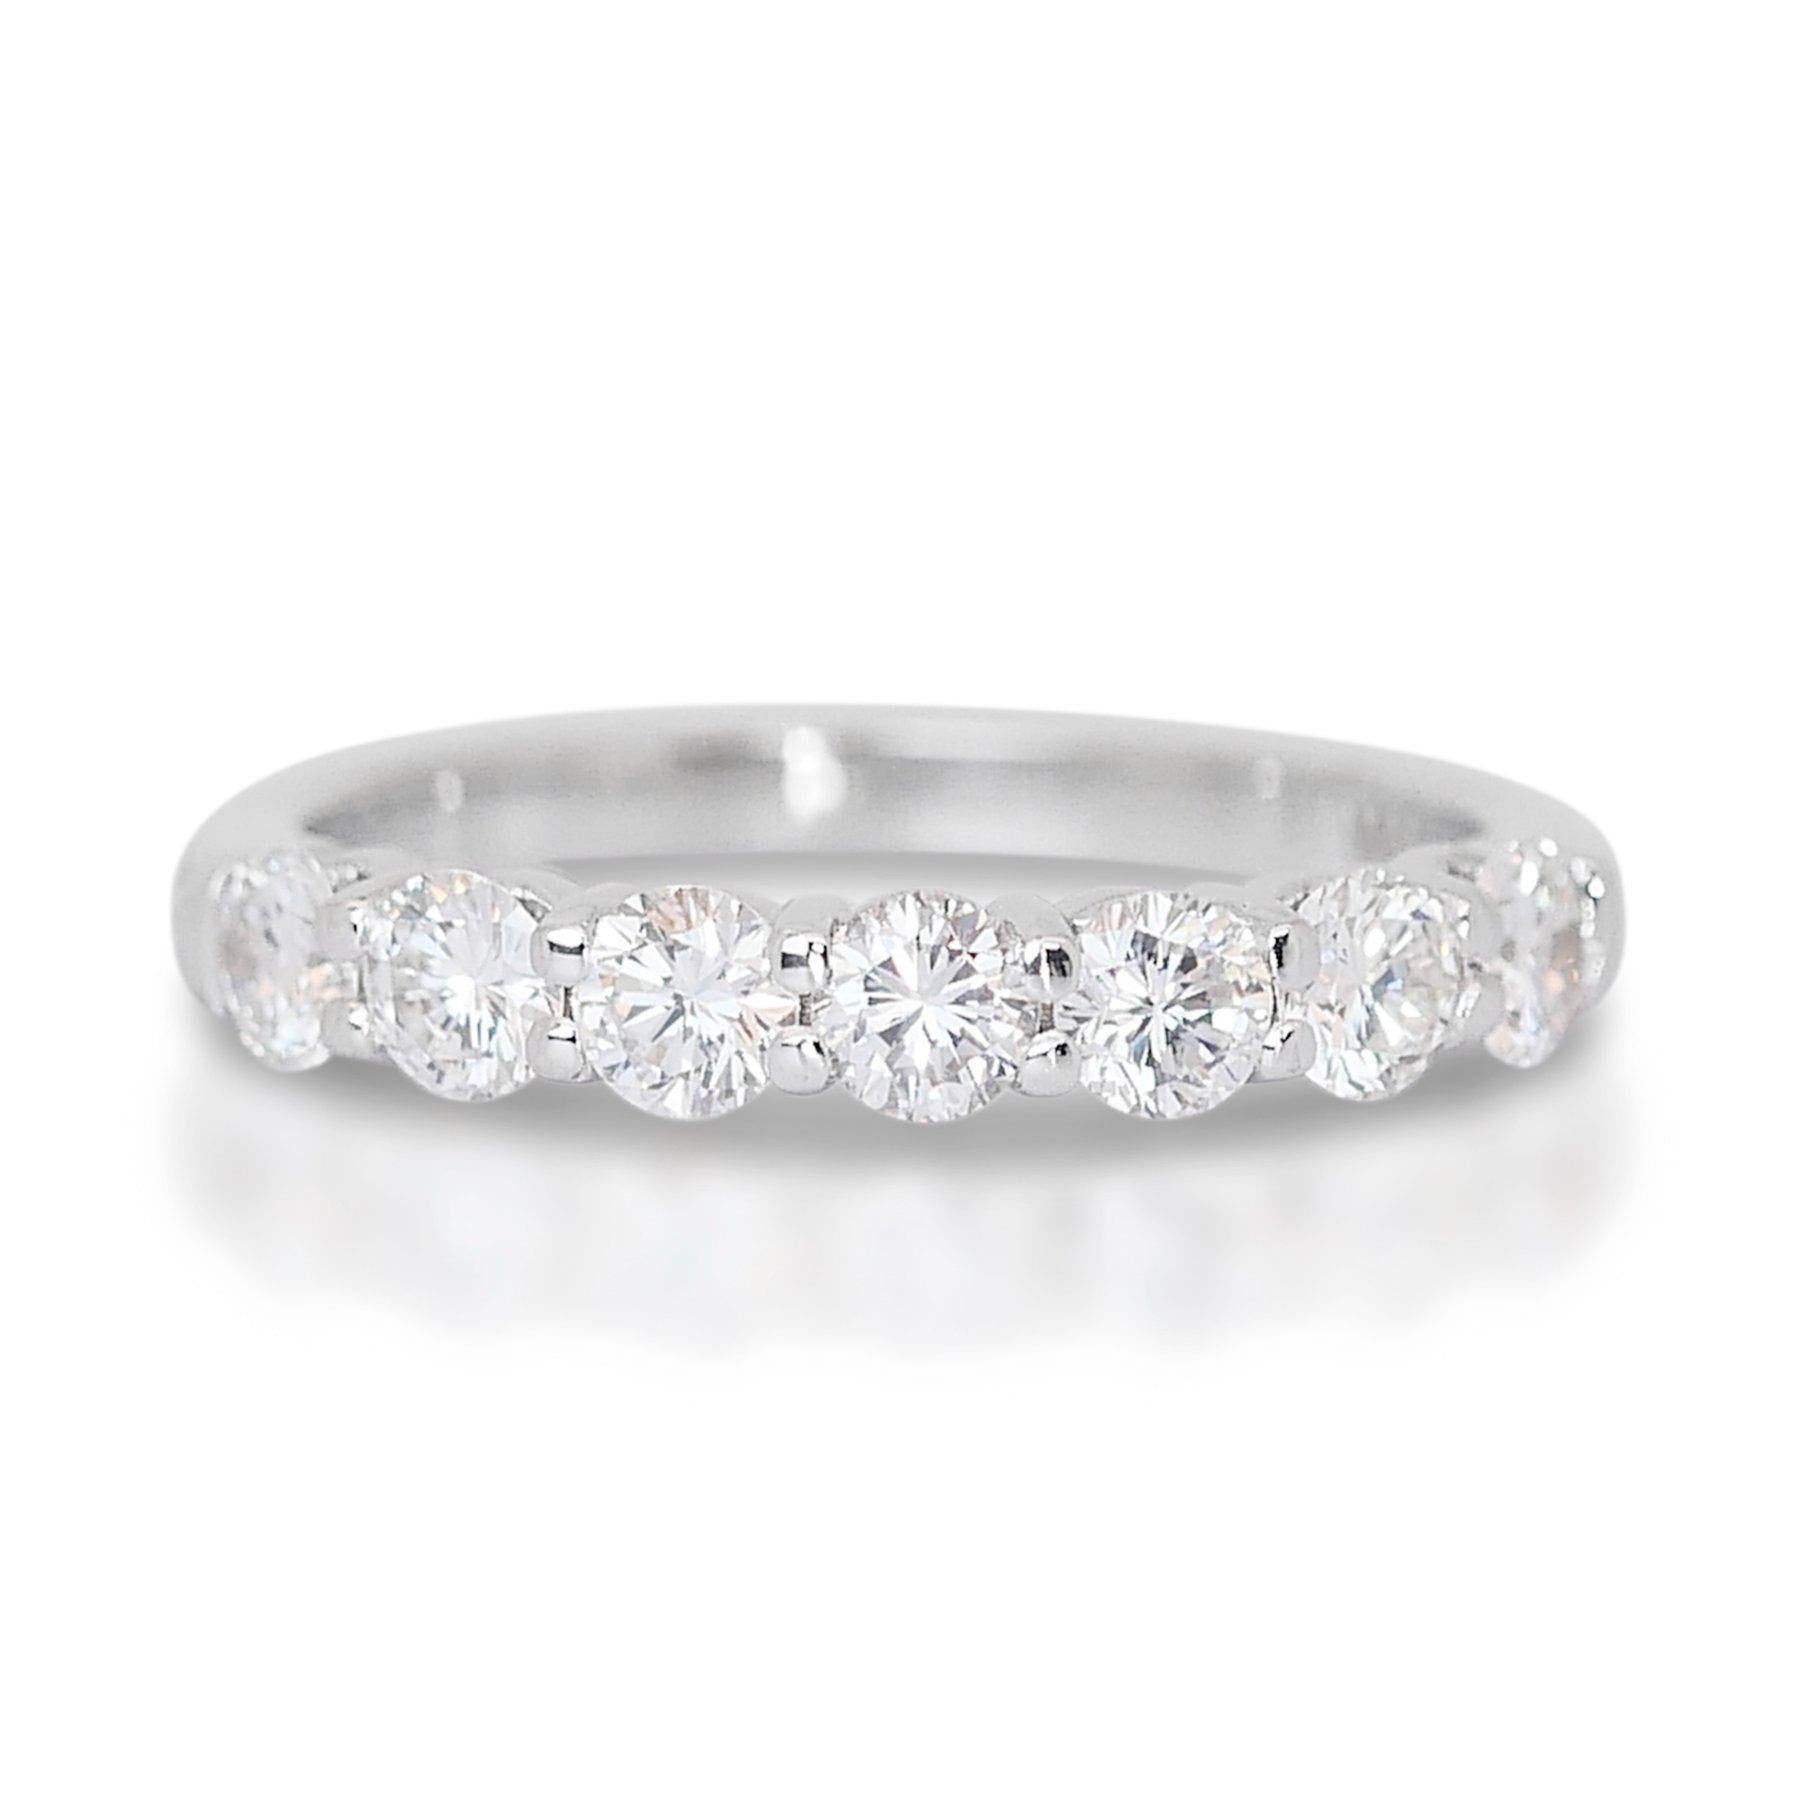 Stunning 2.10ct Diamonds 7-Stone Ring in 18k White Gold - GIA Certified 2